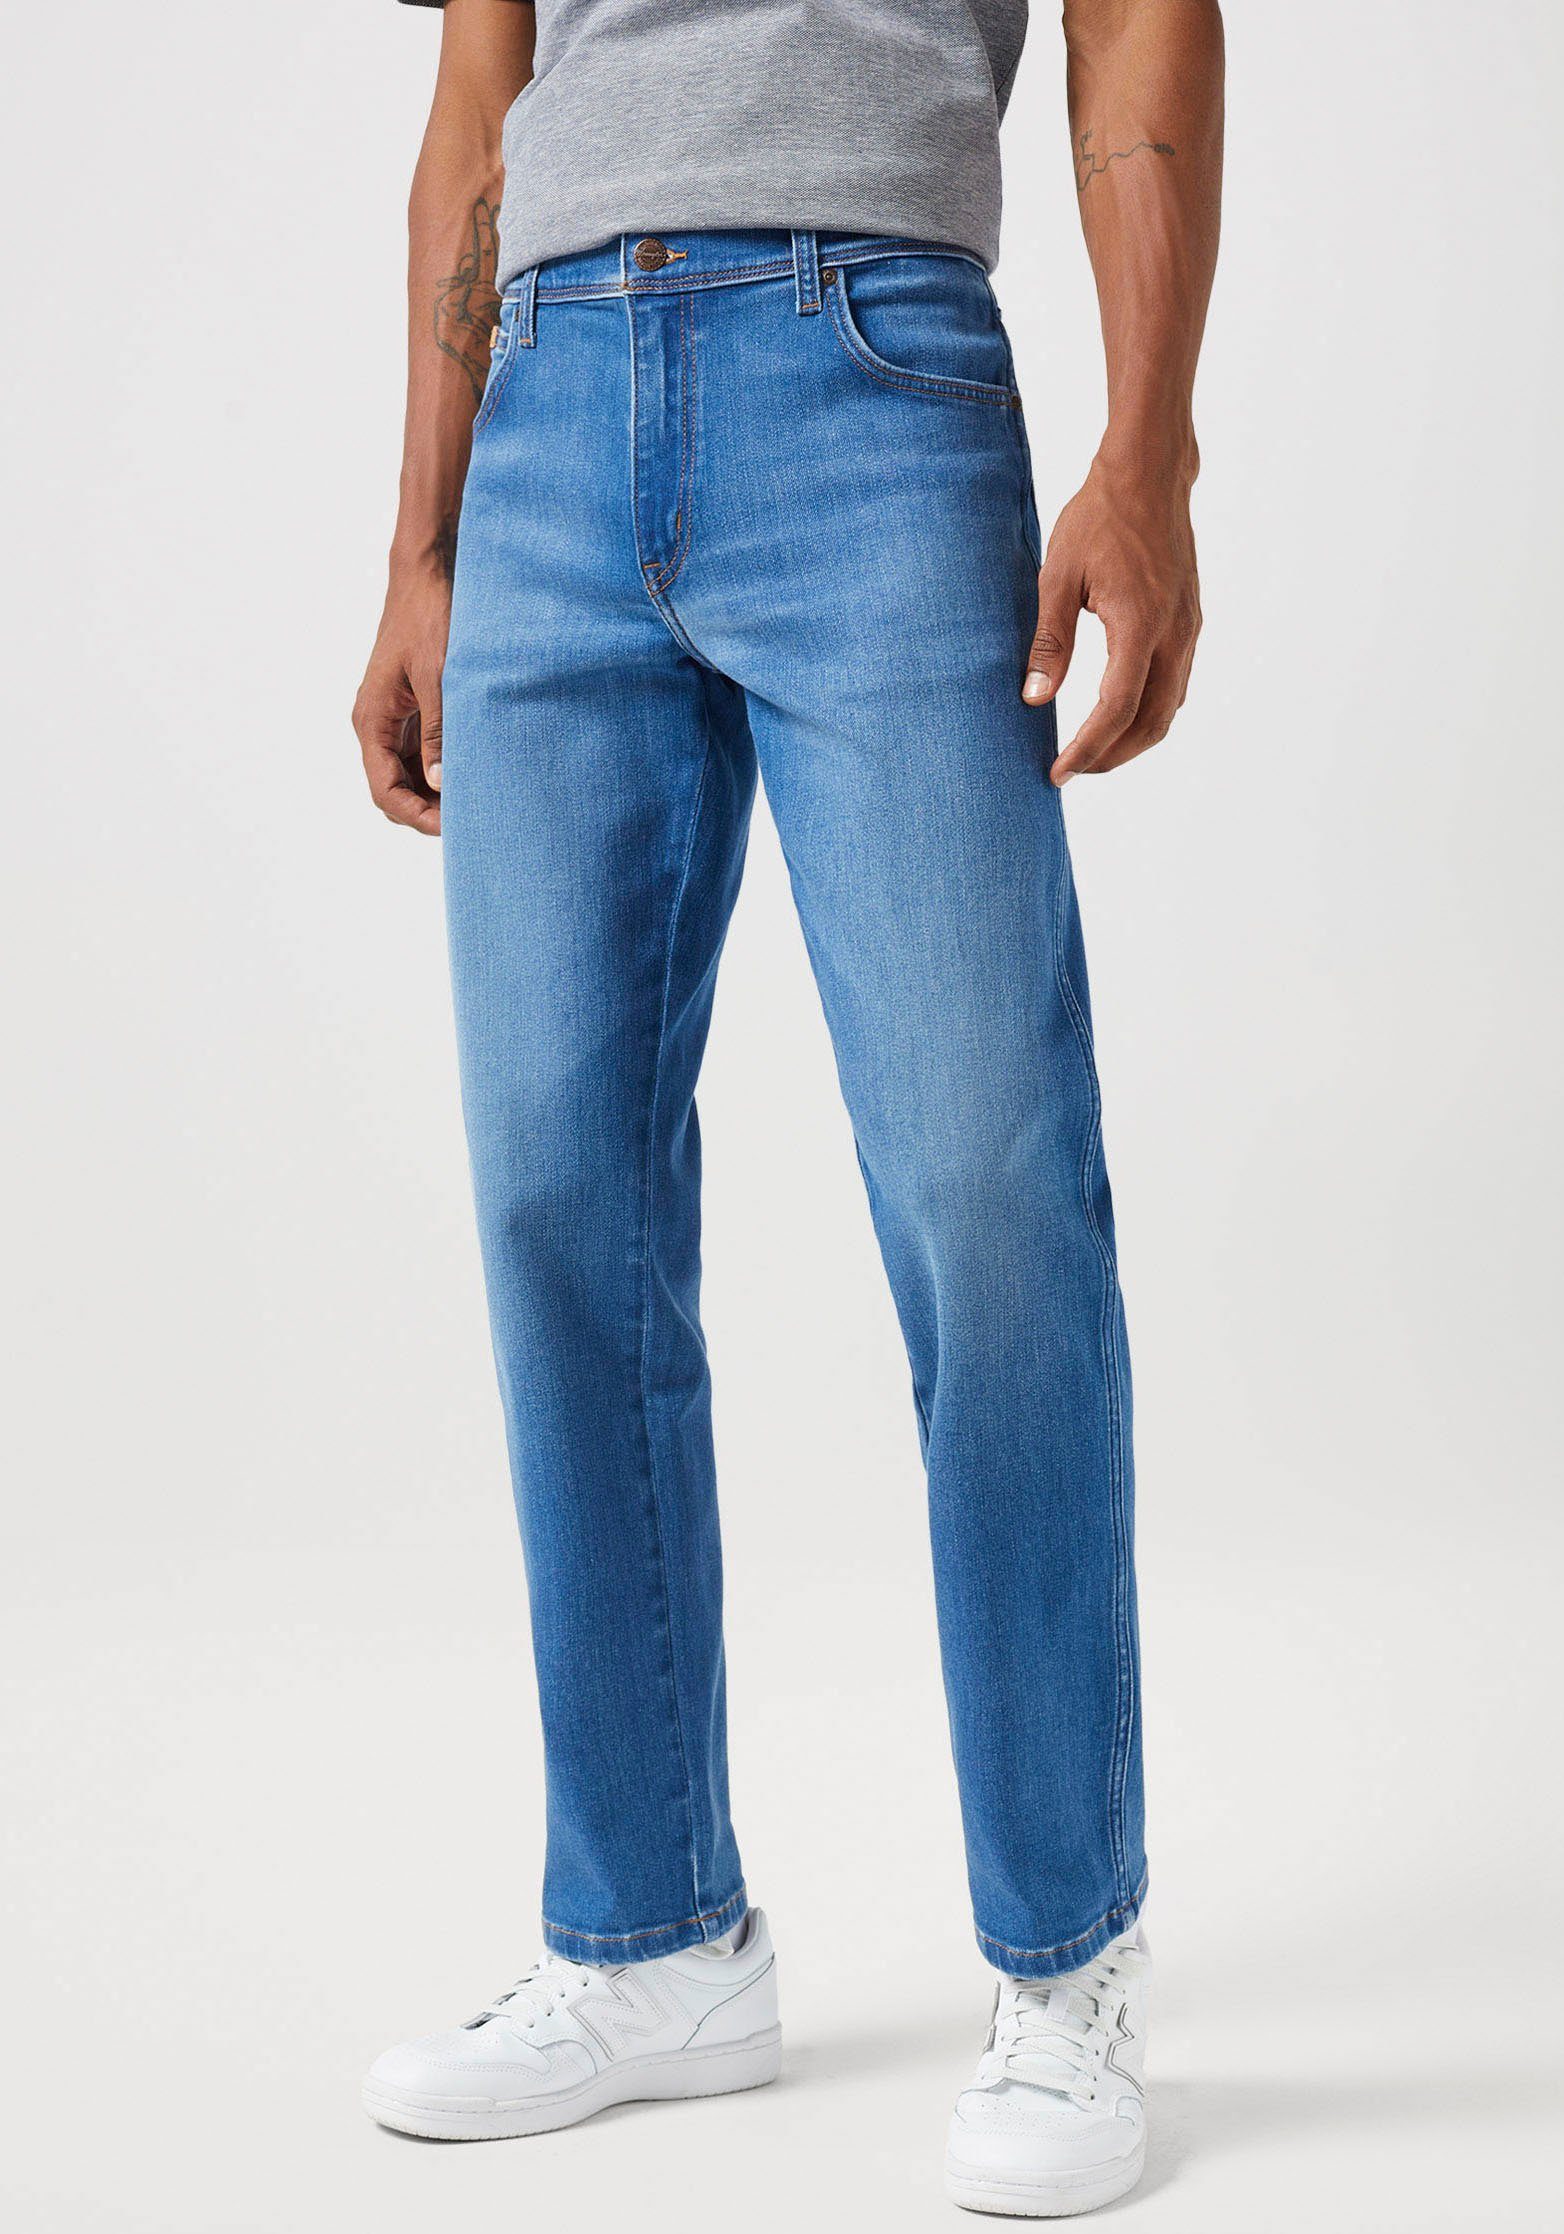 Wrangler 5-pocket jeans TEXAS FREE TO STRETCH